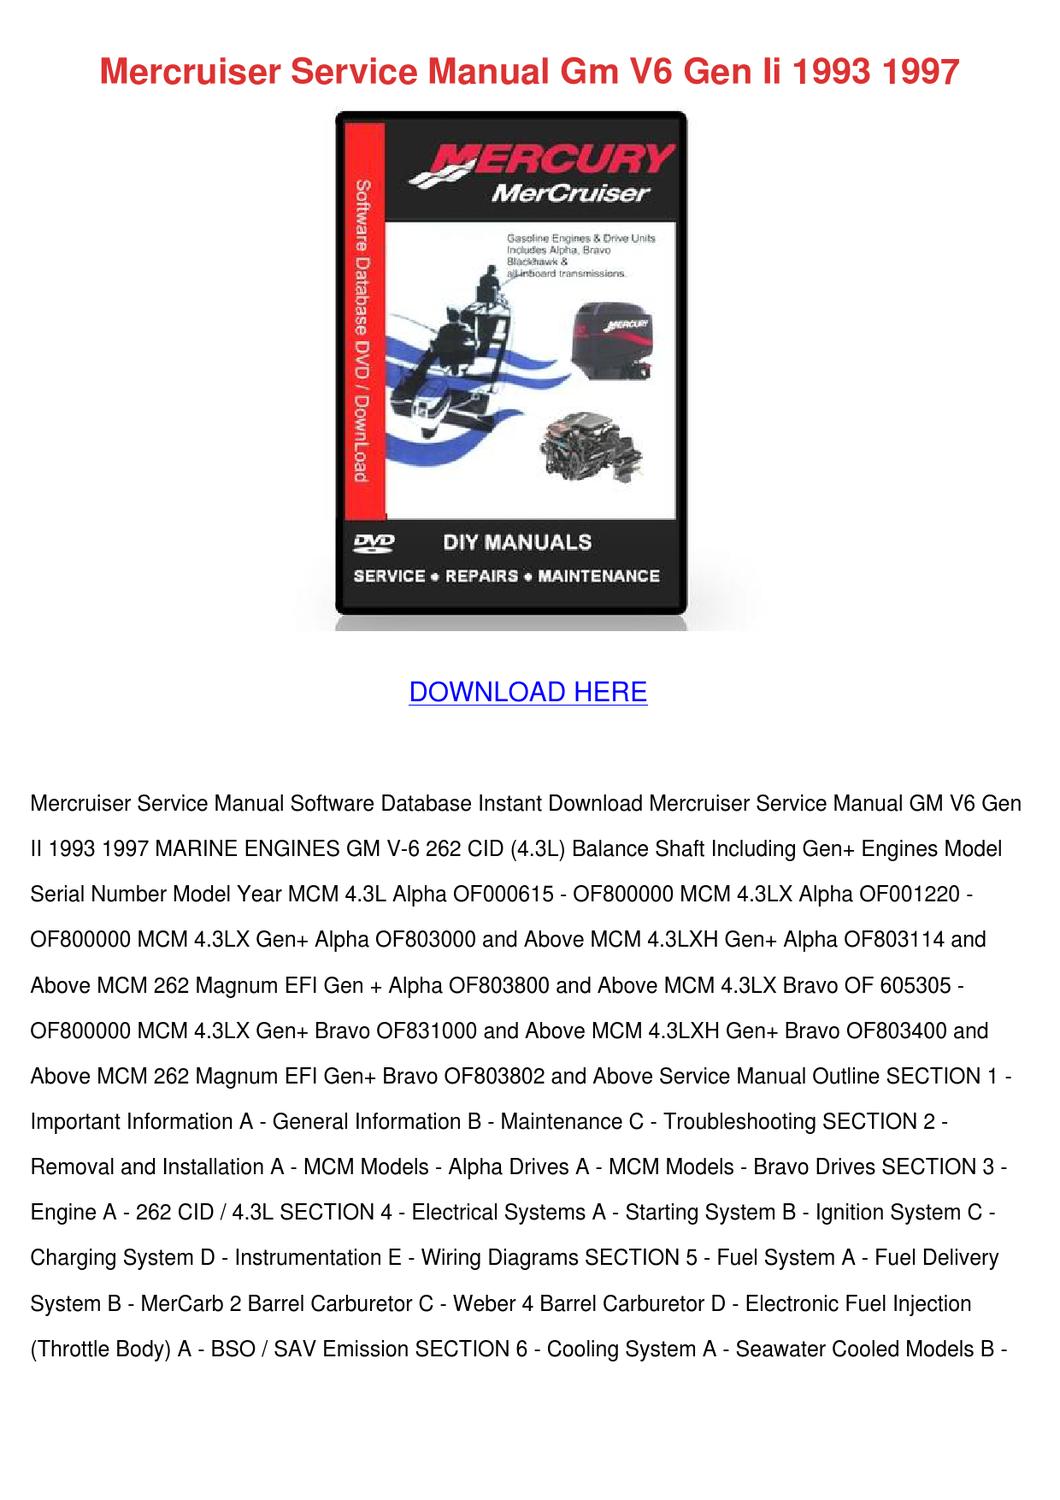 Mercruiser Owners Manual #6 Download